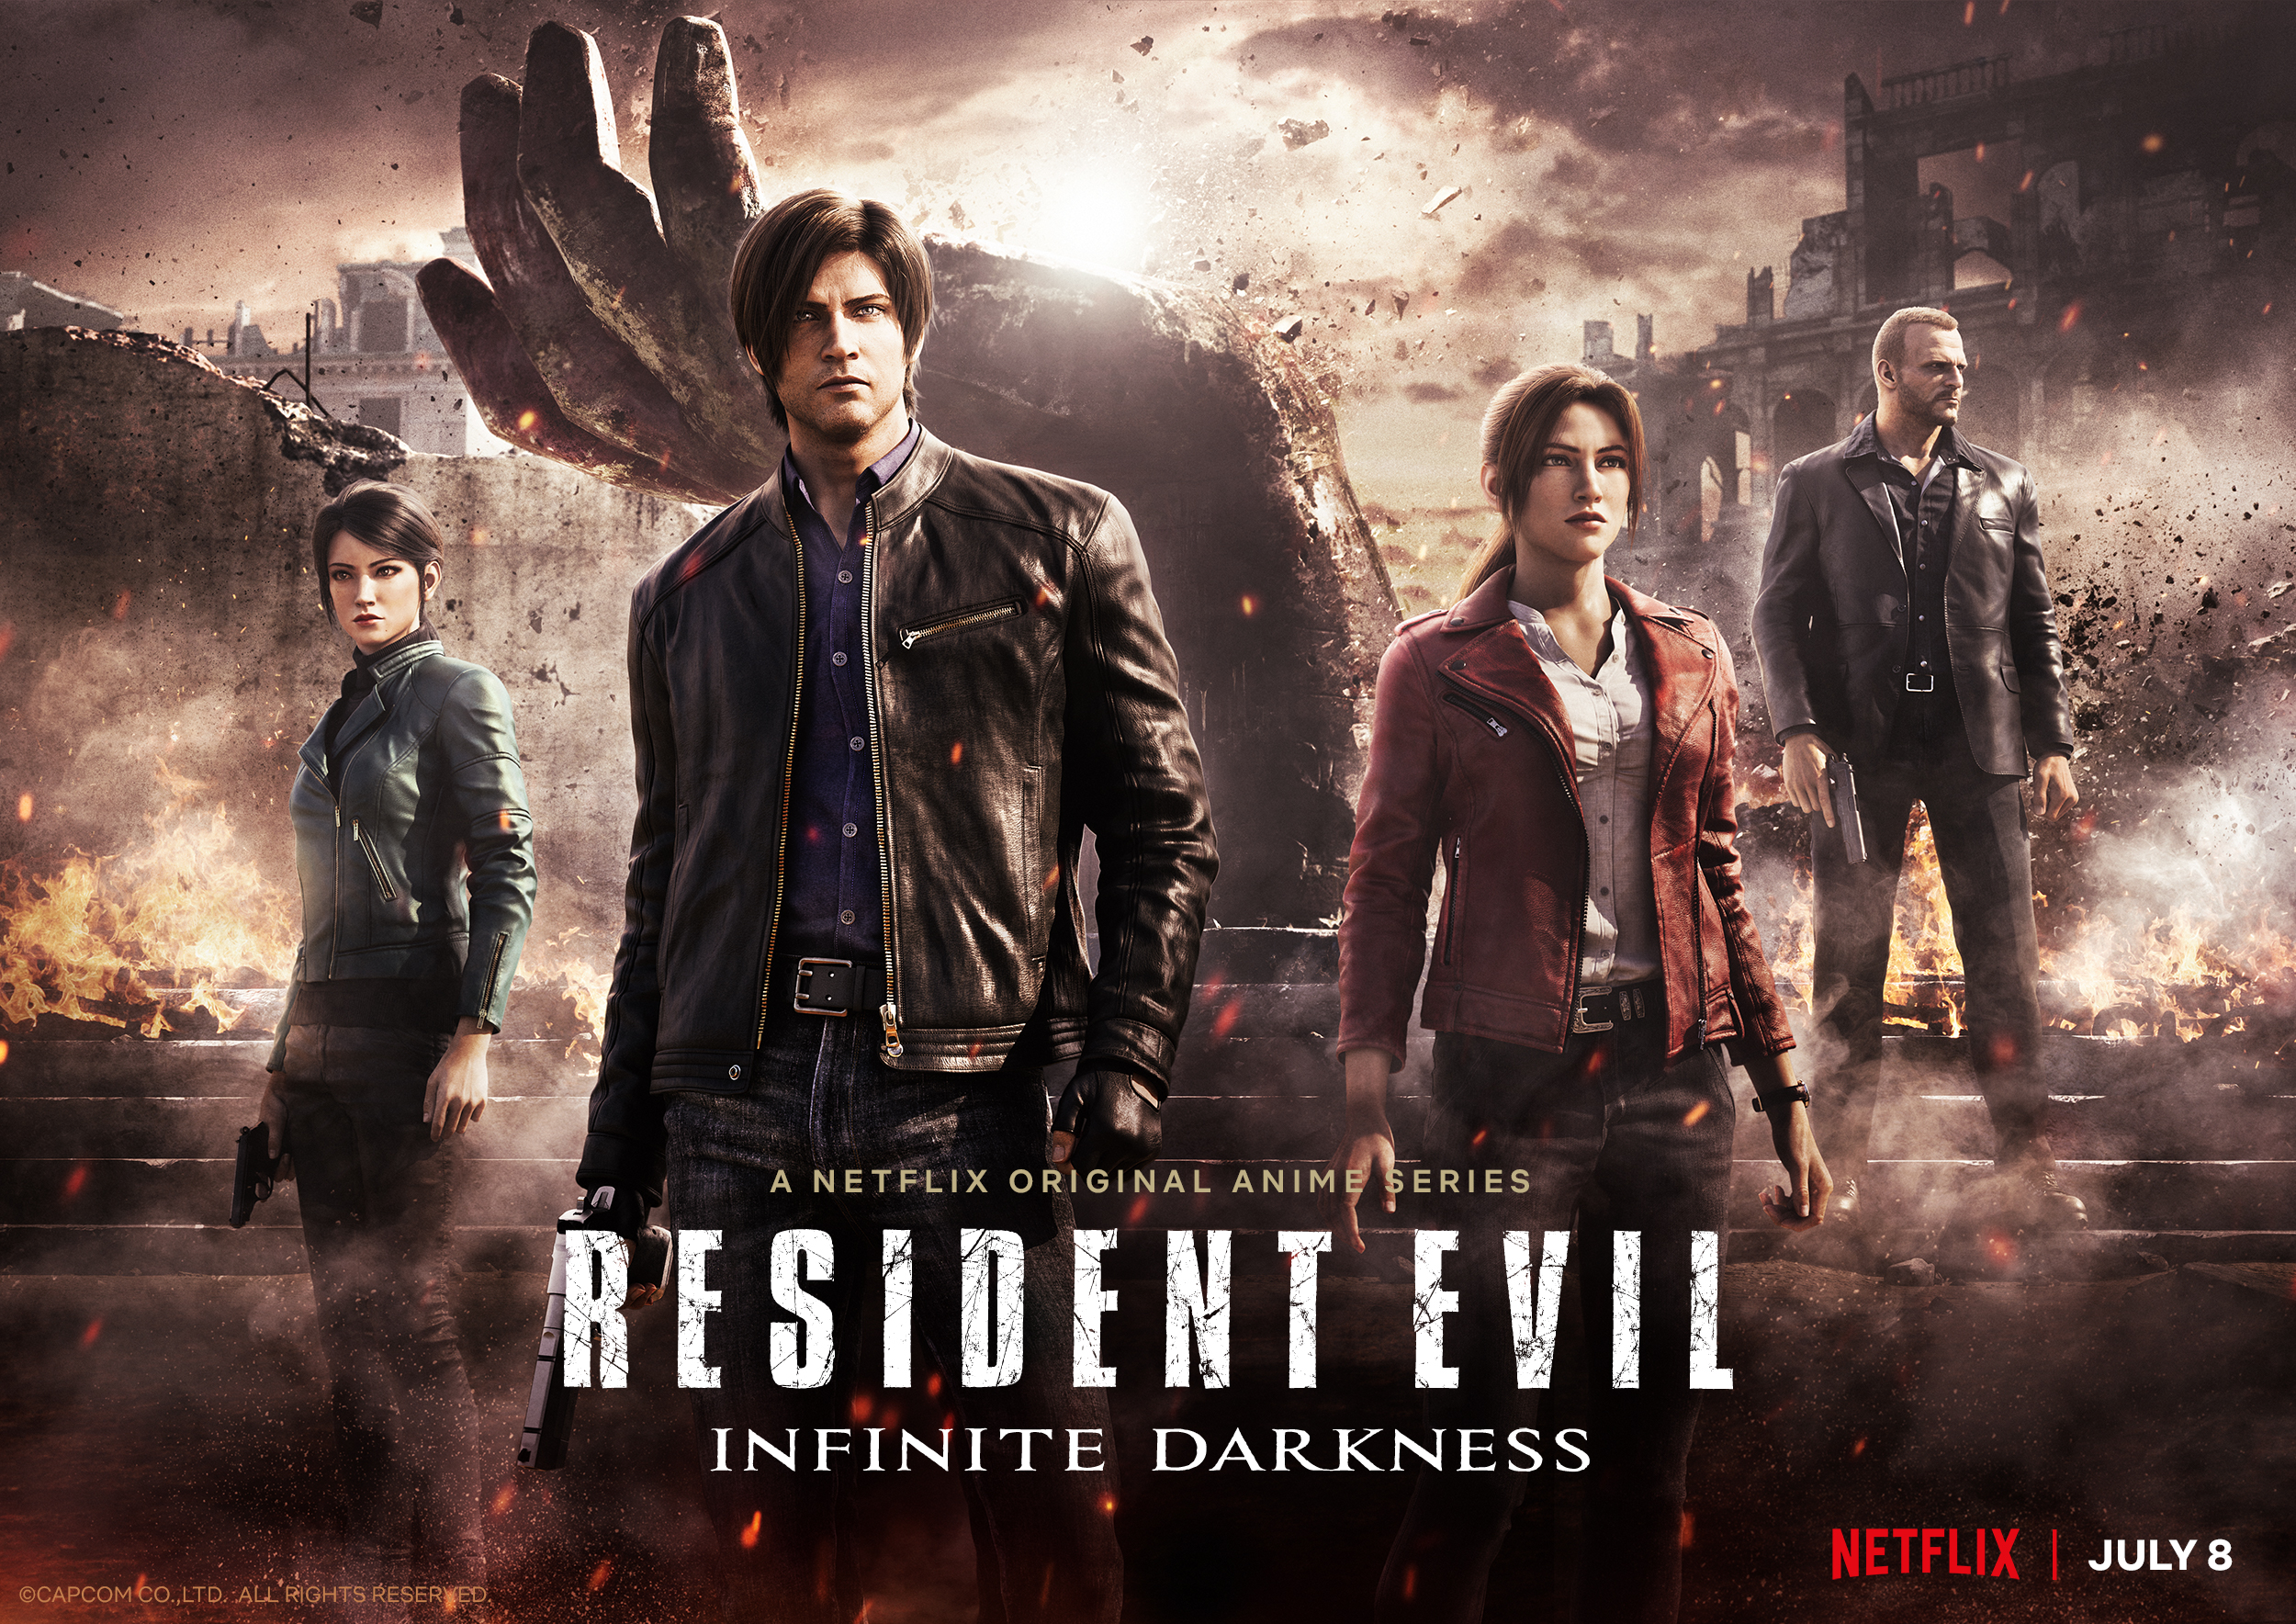 Netflix gives a peek at its upcoming Resident Evil series